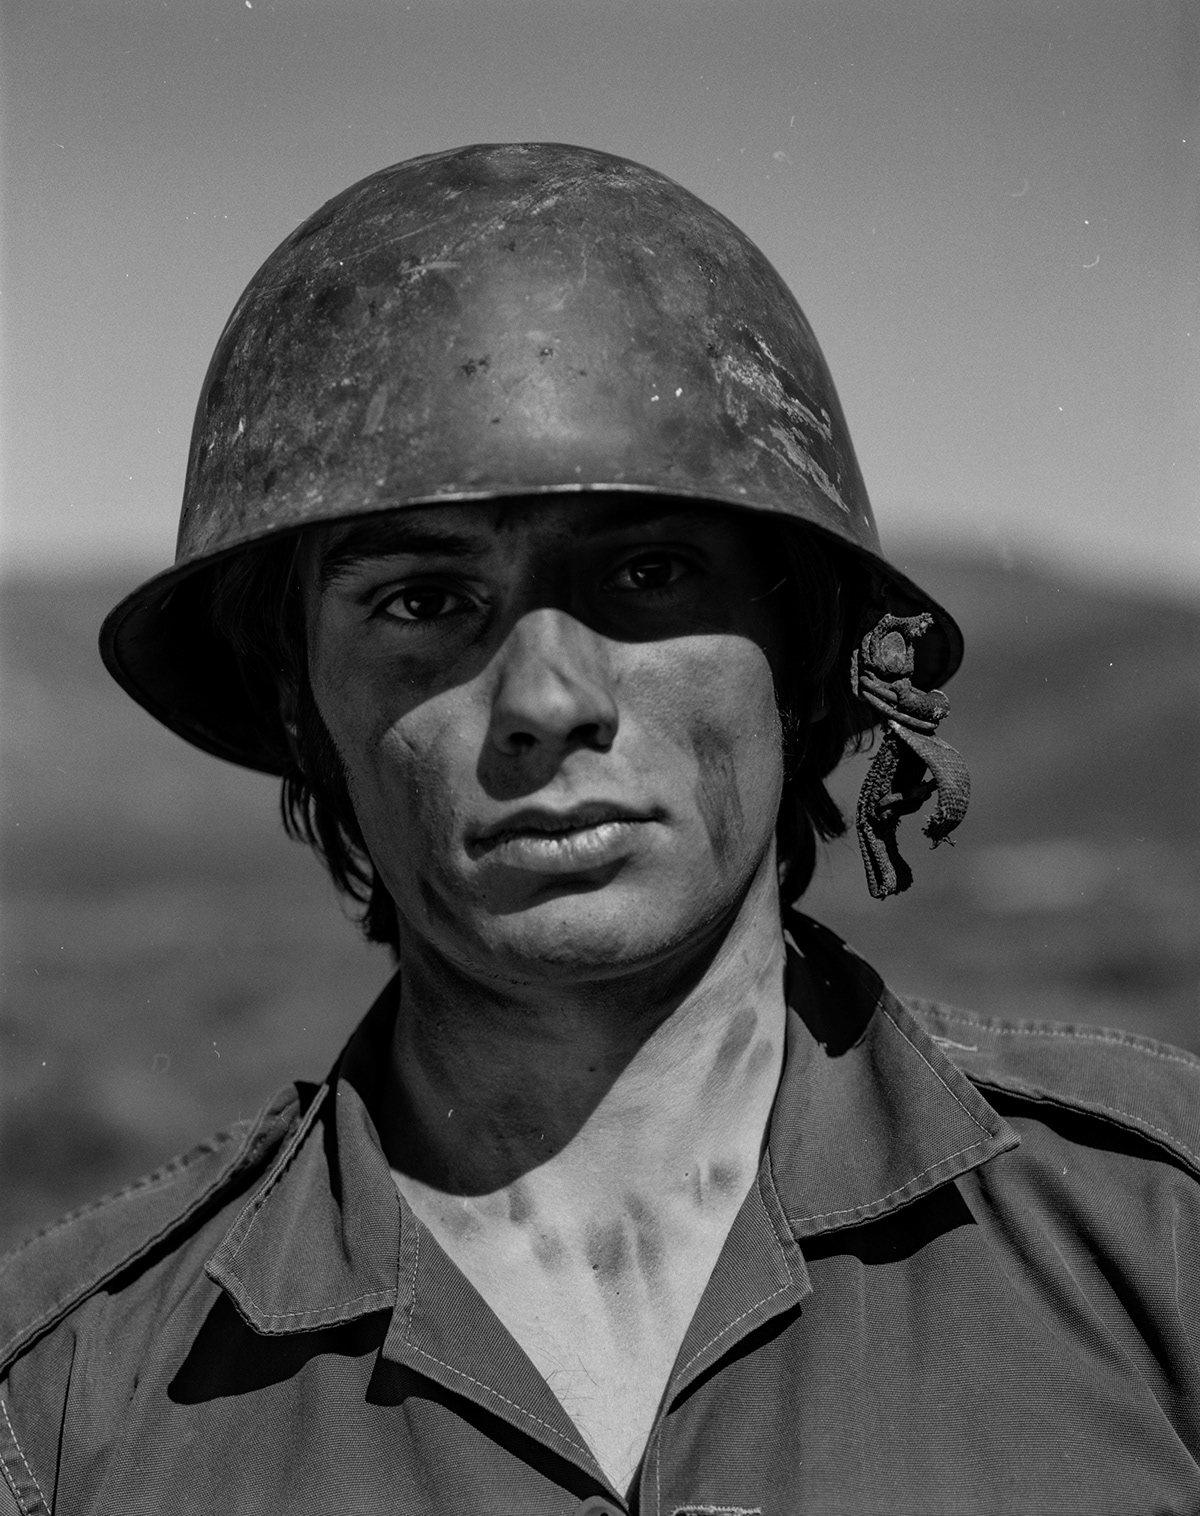 War soldier Helmet Cinema black and white masculinity portrait photography portrait Combat warfare